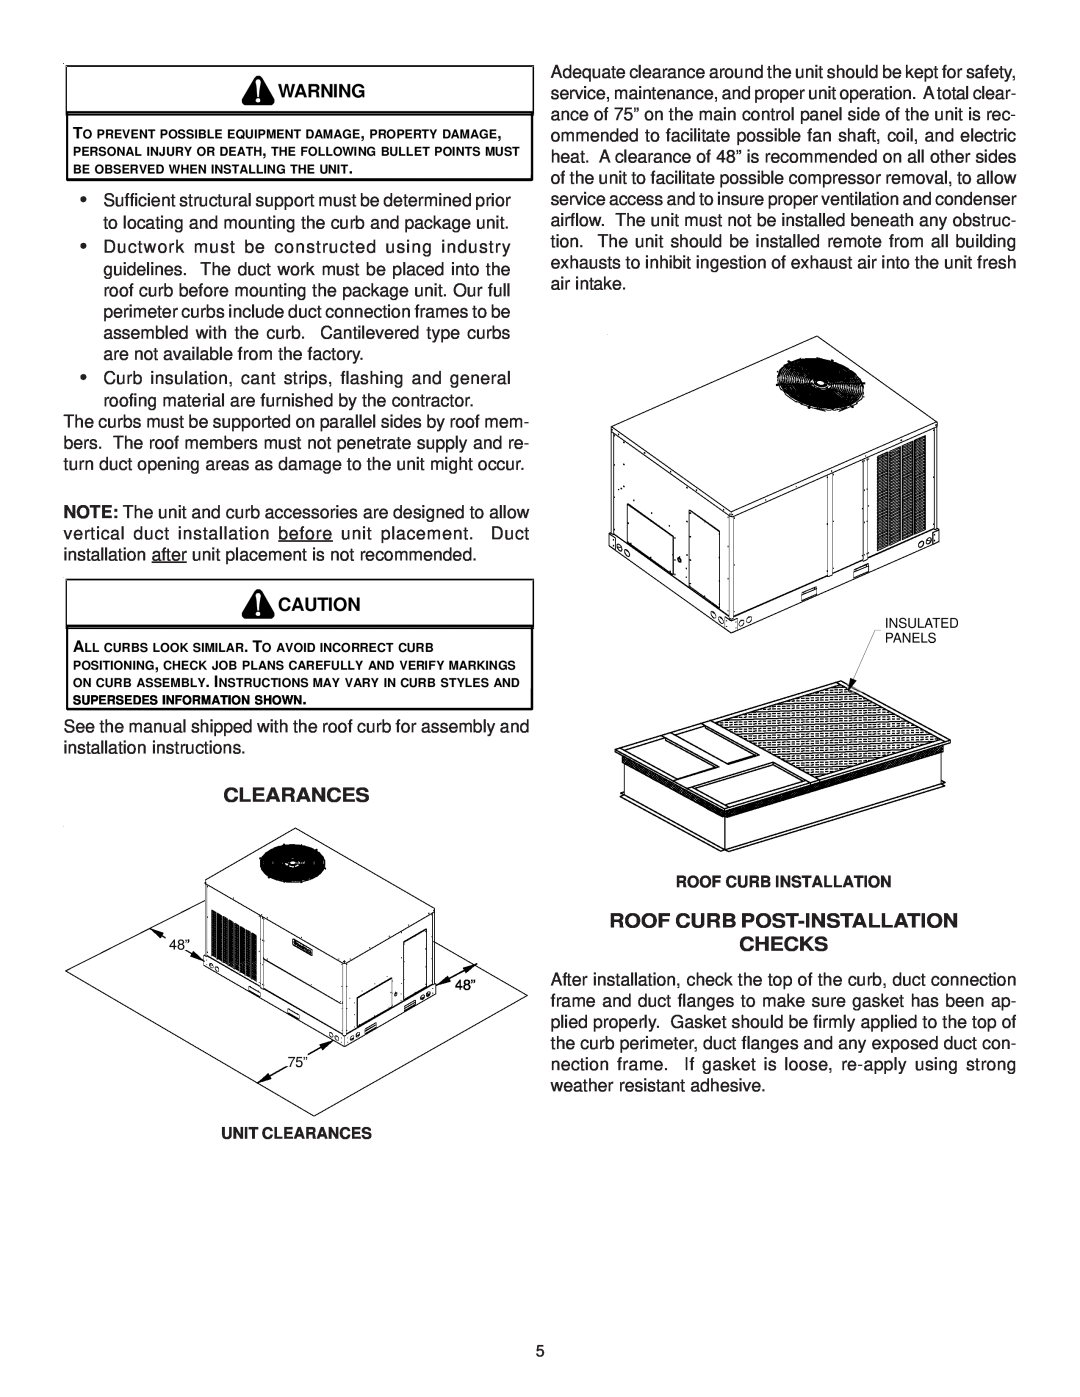 Goodman Mfg IO-354B installation instructions Clearances, Roof Curb Post-Installation, Checks 